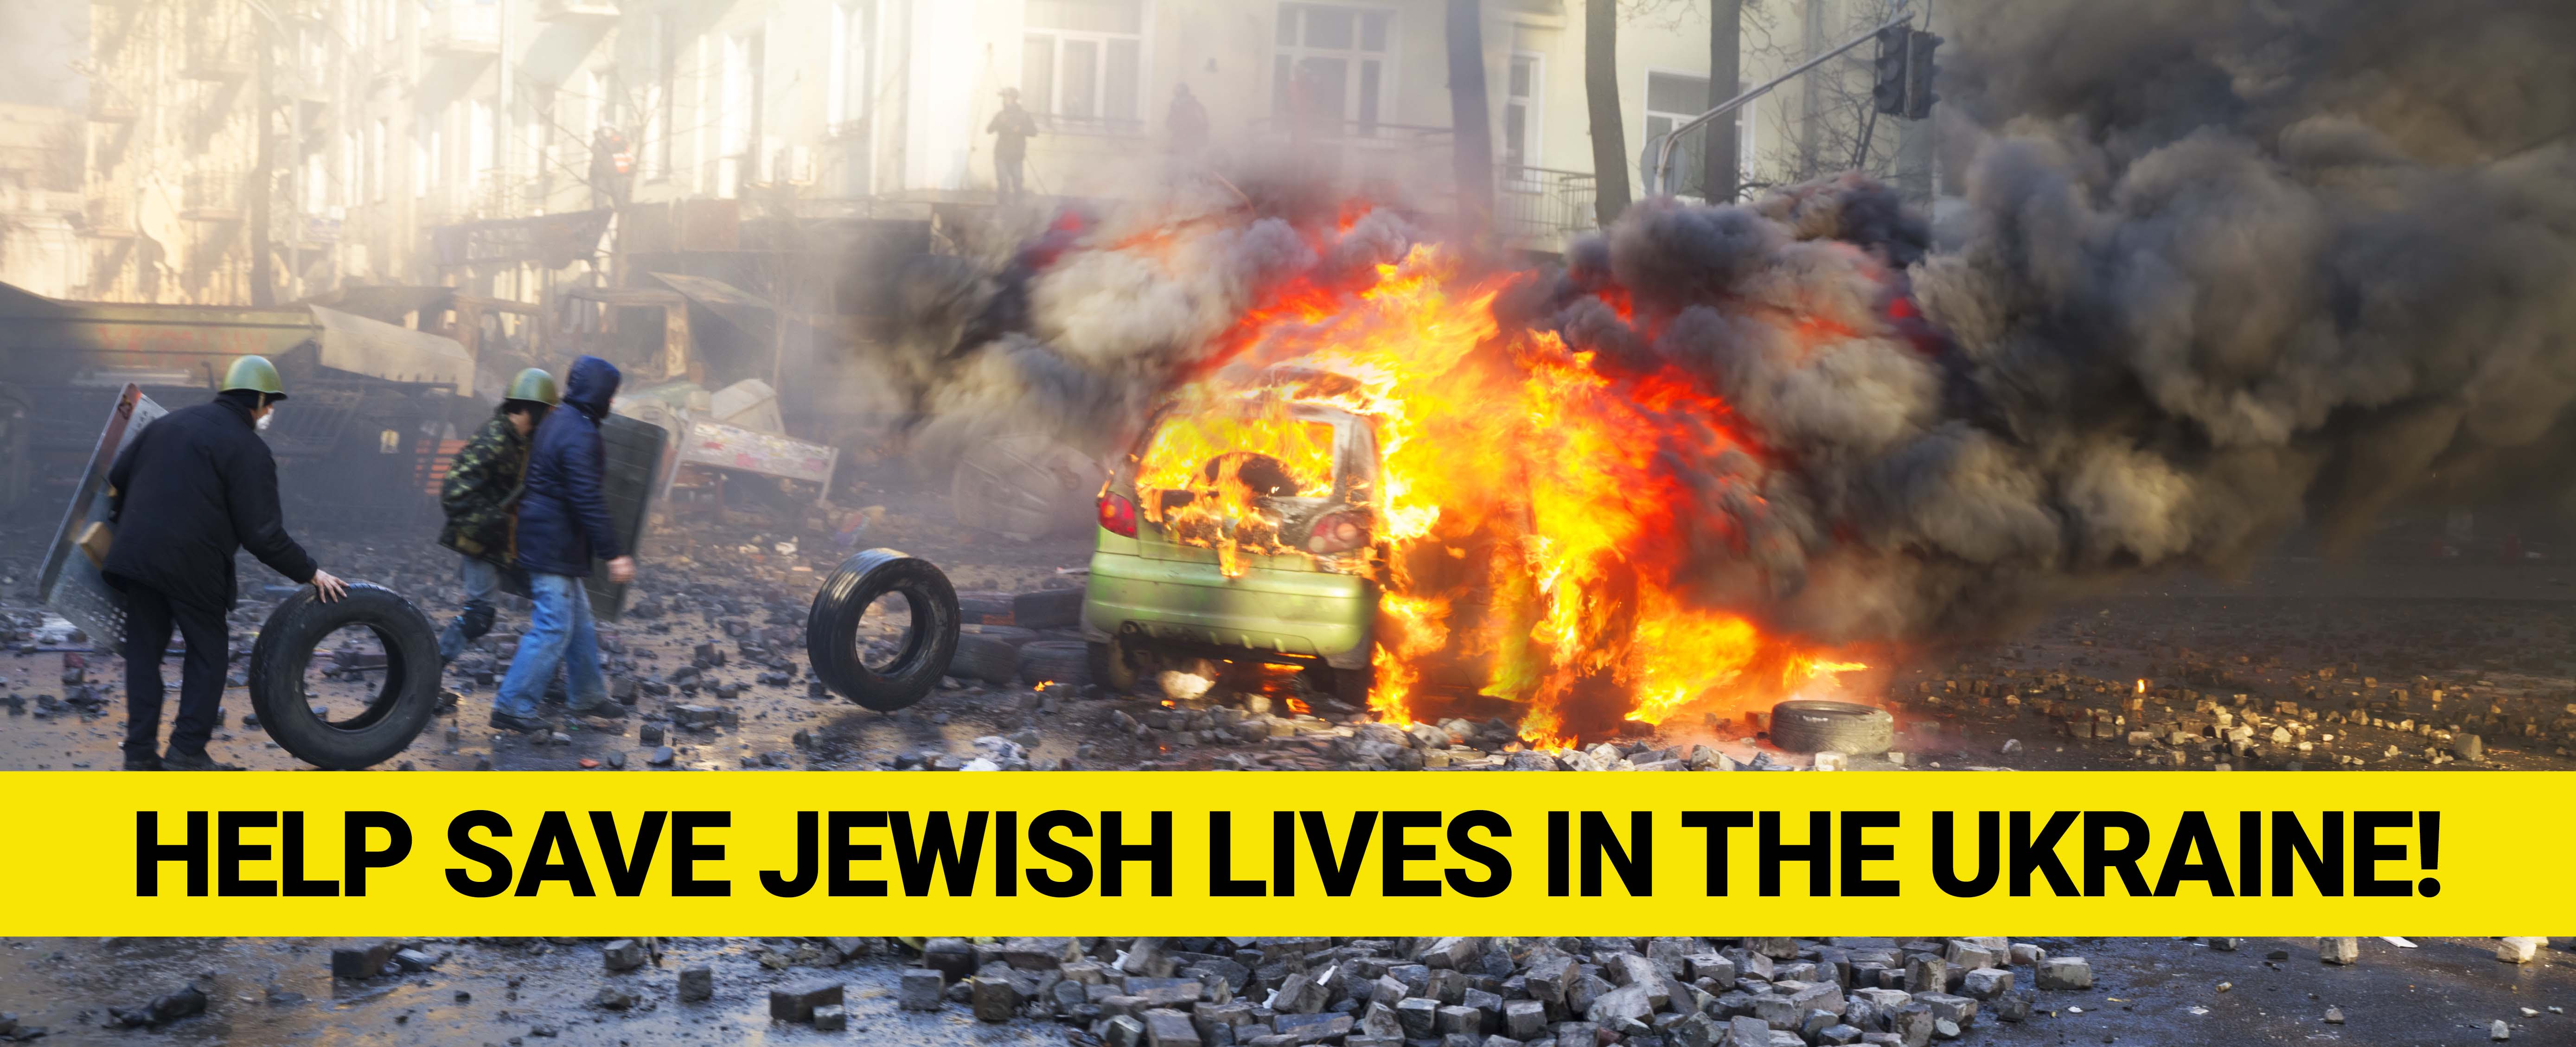 Save Jewish Lives in the Ukraine NOW!-The Jewish community...